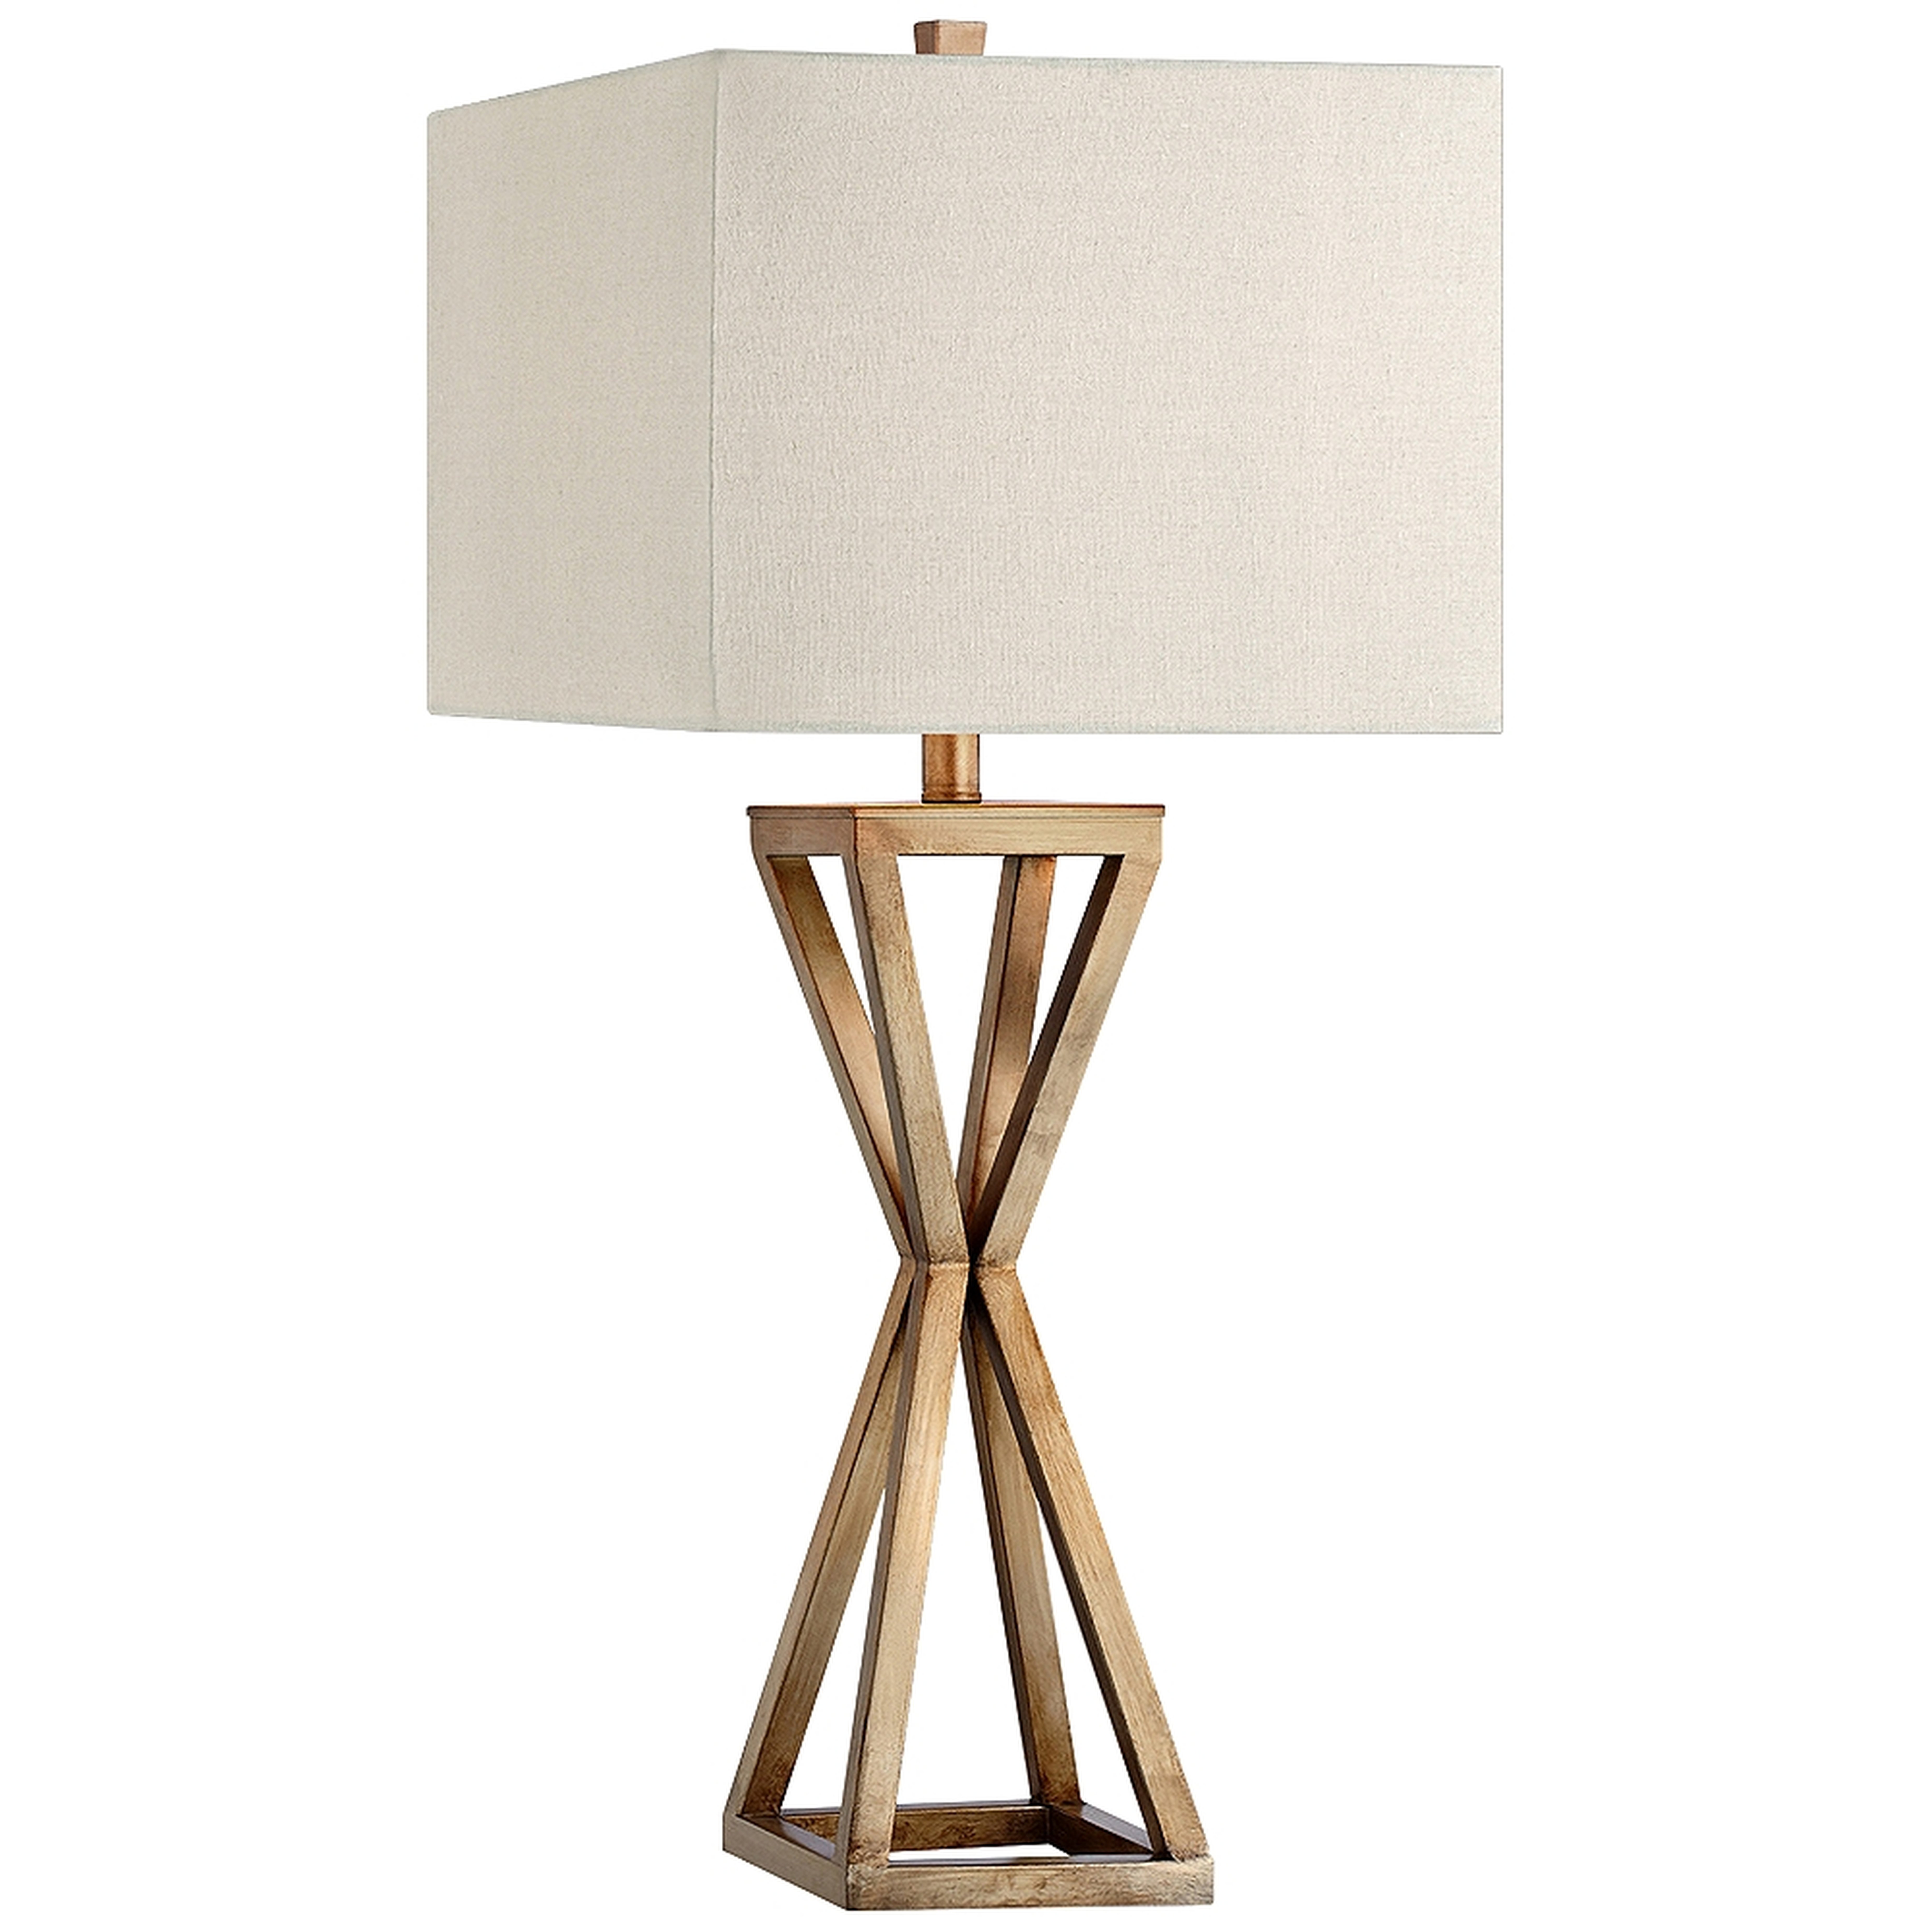 Ezra Painted Gold Table Lamp - Style # 44E11 - Lamps Plus